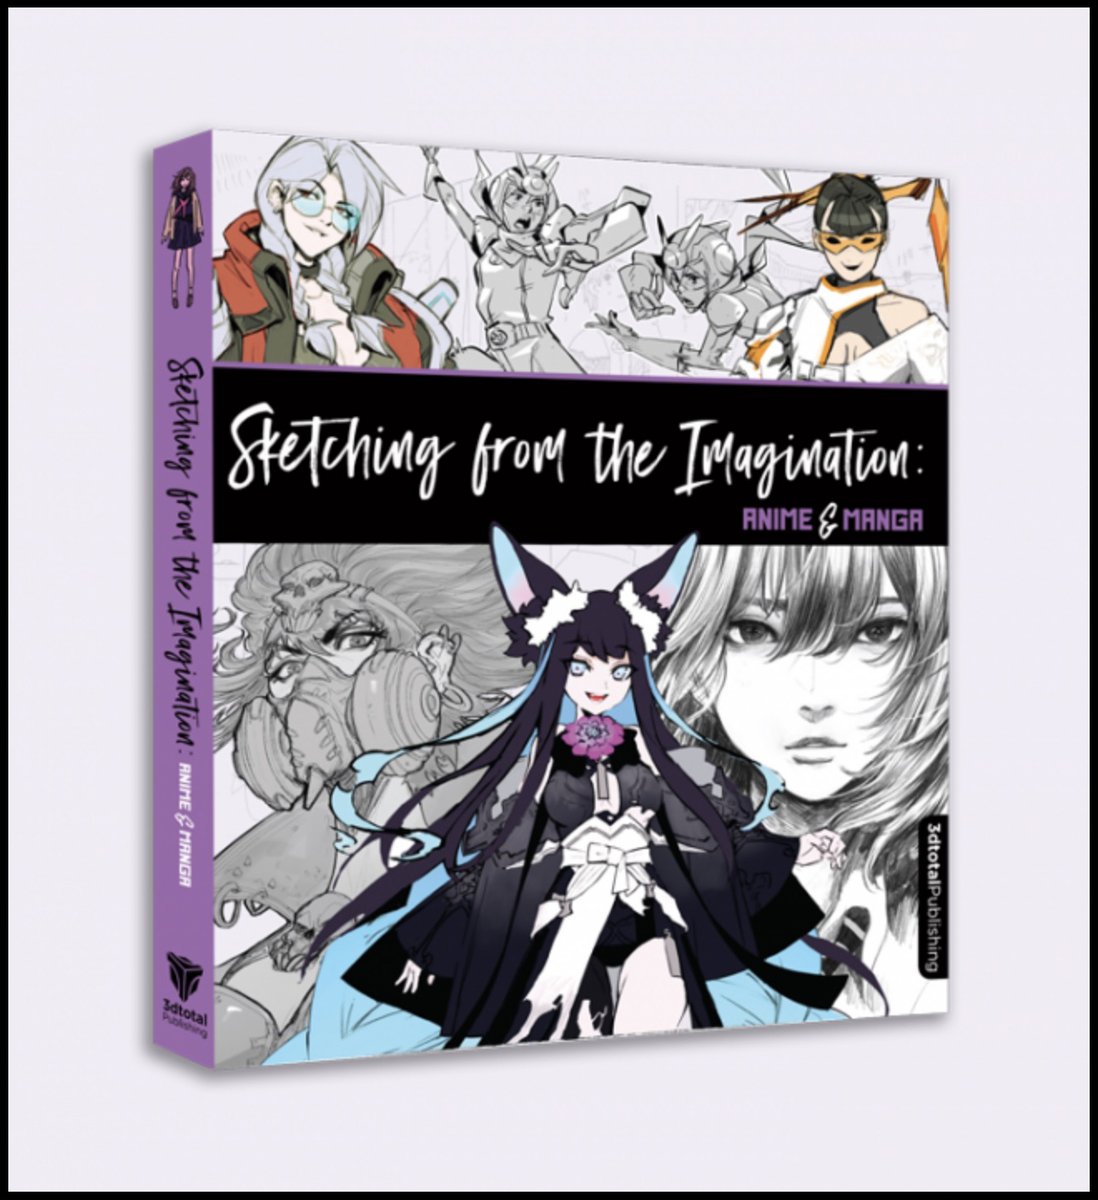 3dtotal publishingから発売中の"Sketching from the Imagination: Anime & Manga"に作品が掲載されています。https://t.co/vGlnQoP5WU 